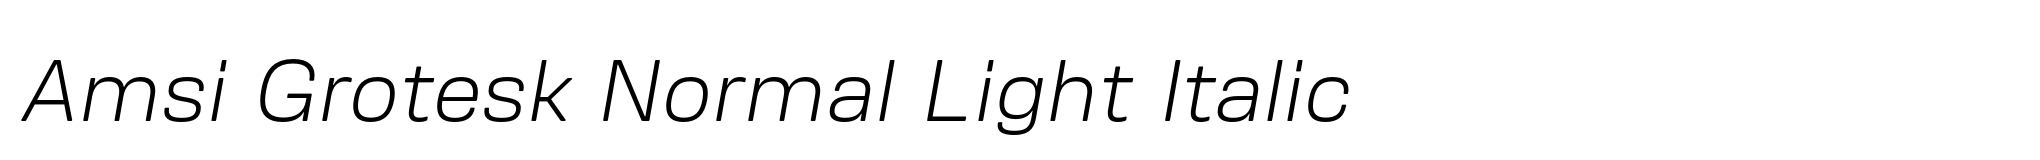 Amsi Grotesk Normal Light Italic image